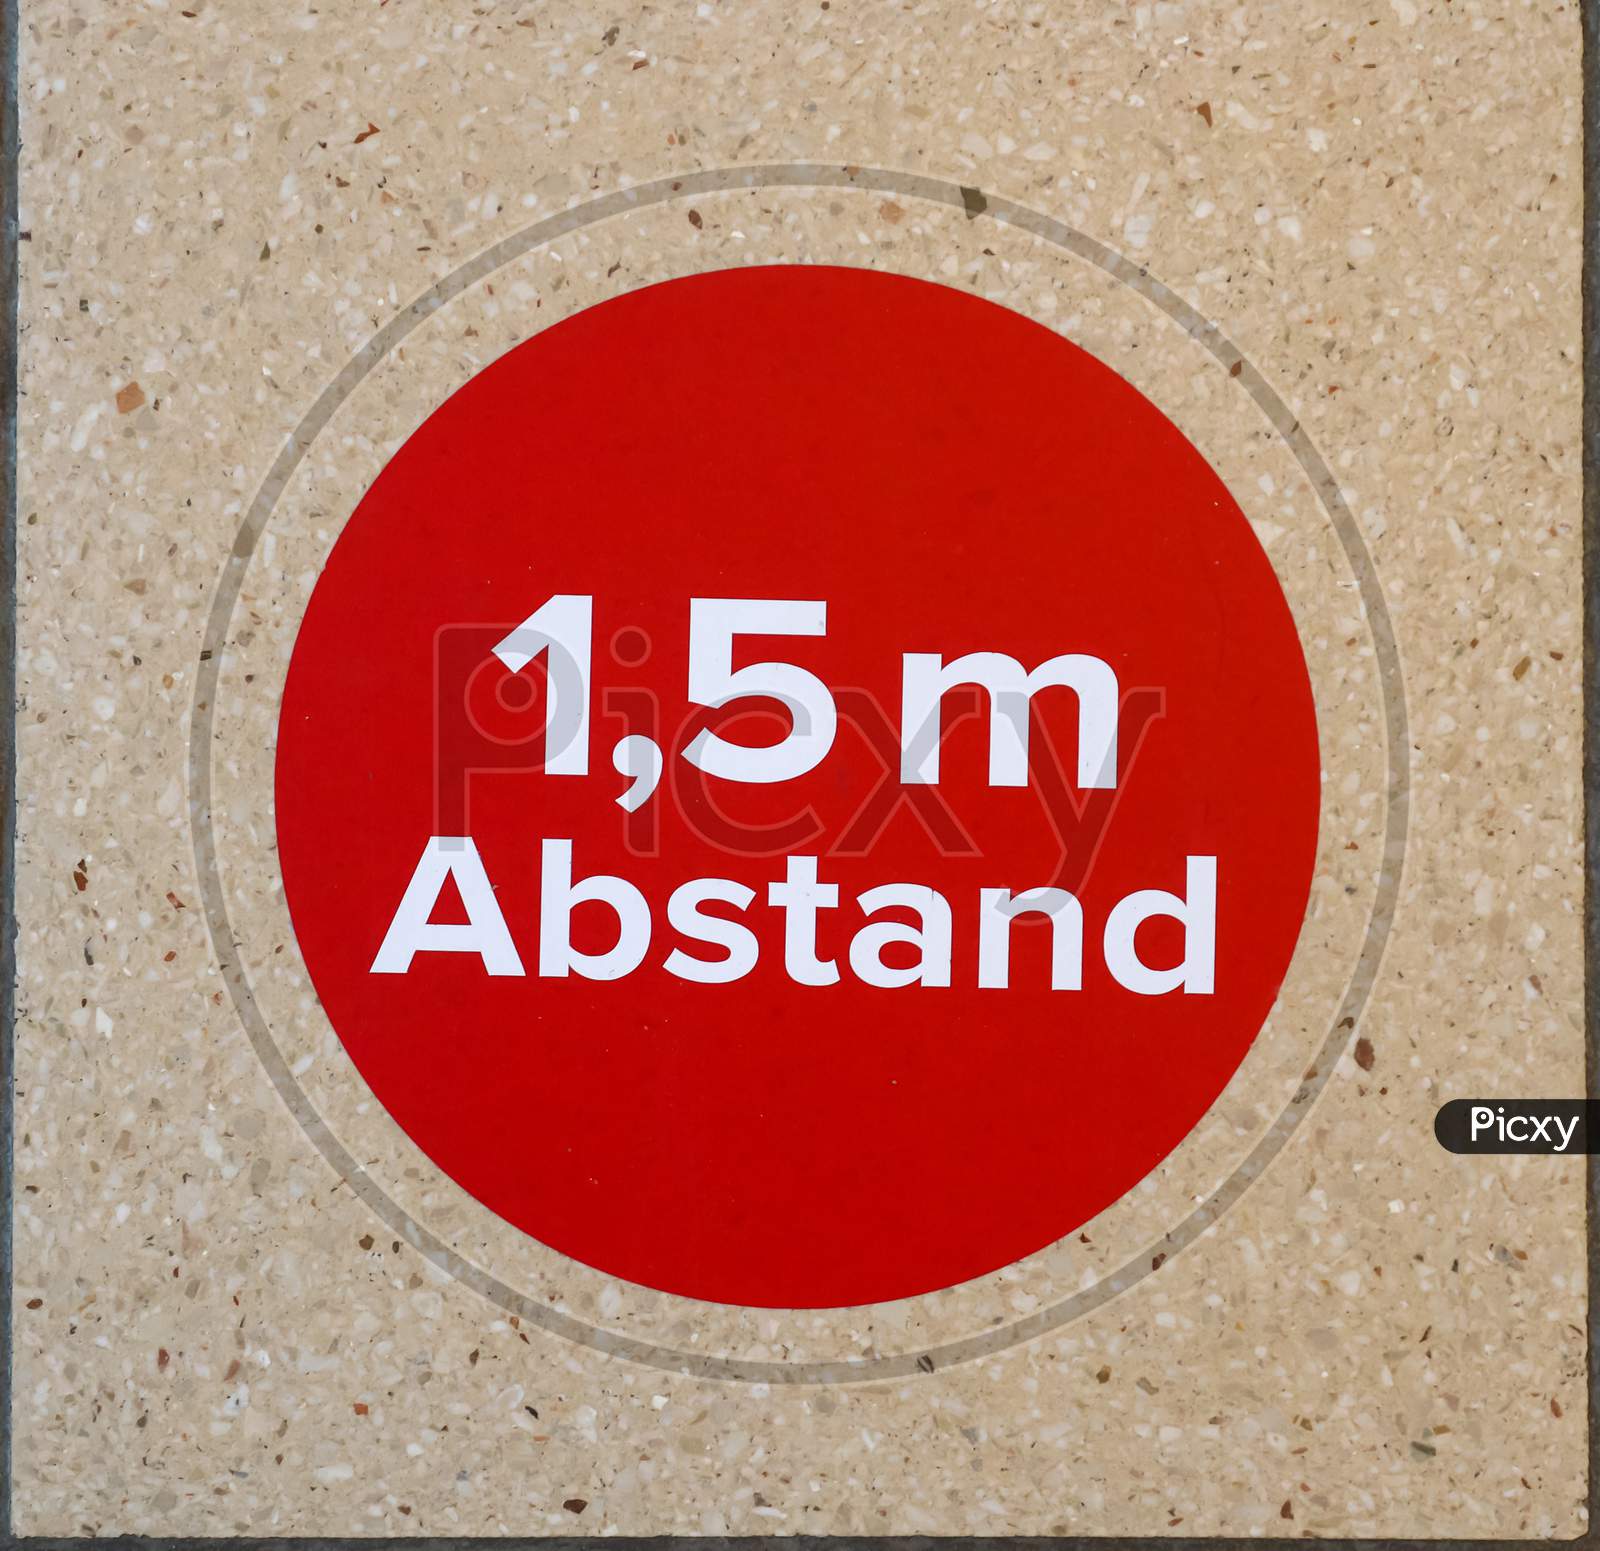 Keep Distance Symbol In German Language. Bitte Abstand Halten! 1.5 Meter Social Distancing Sign For Covid-19.